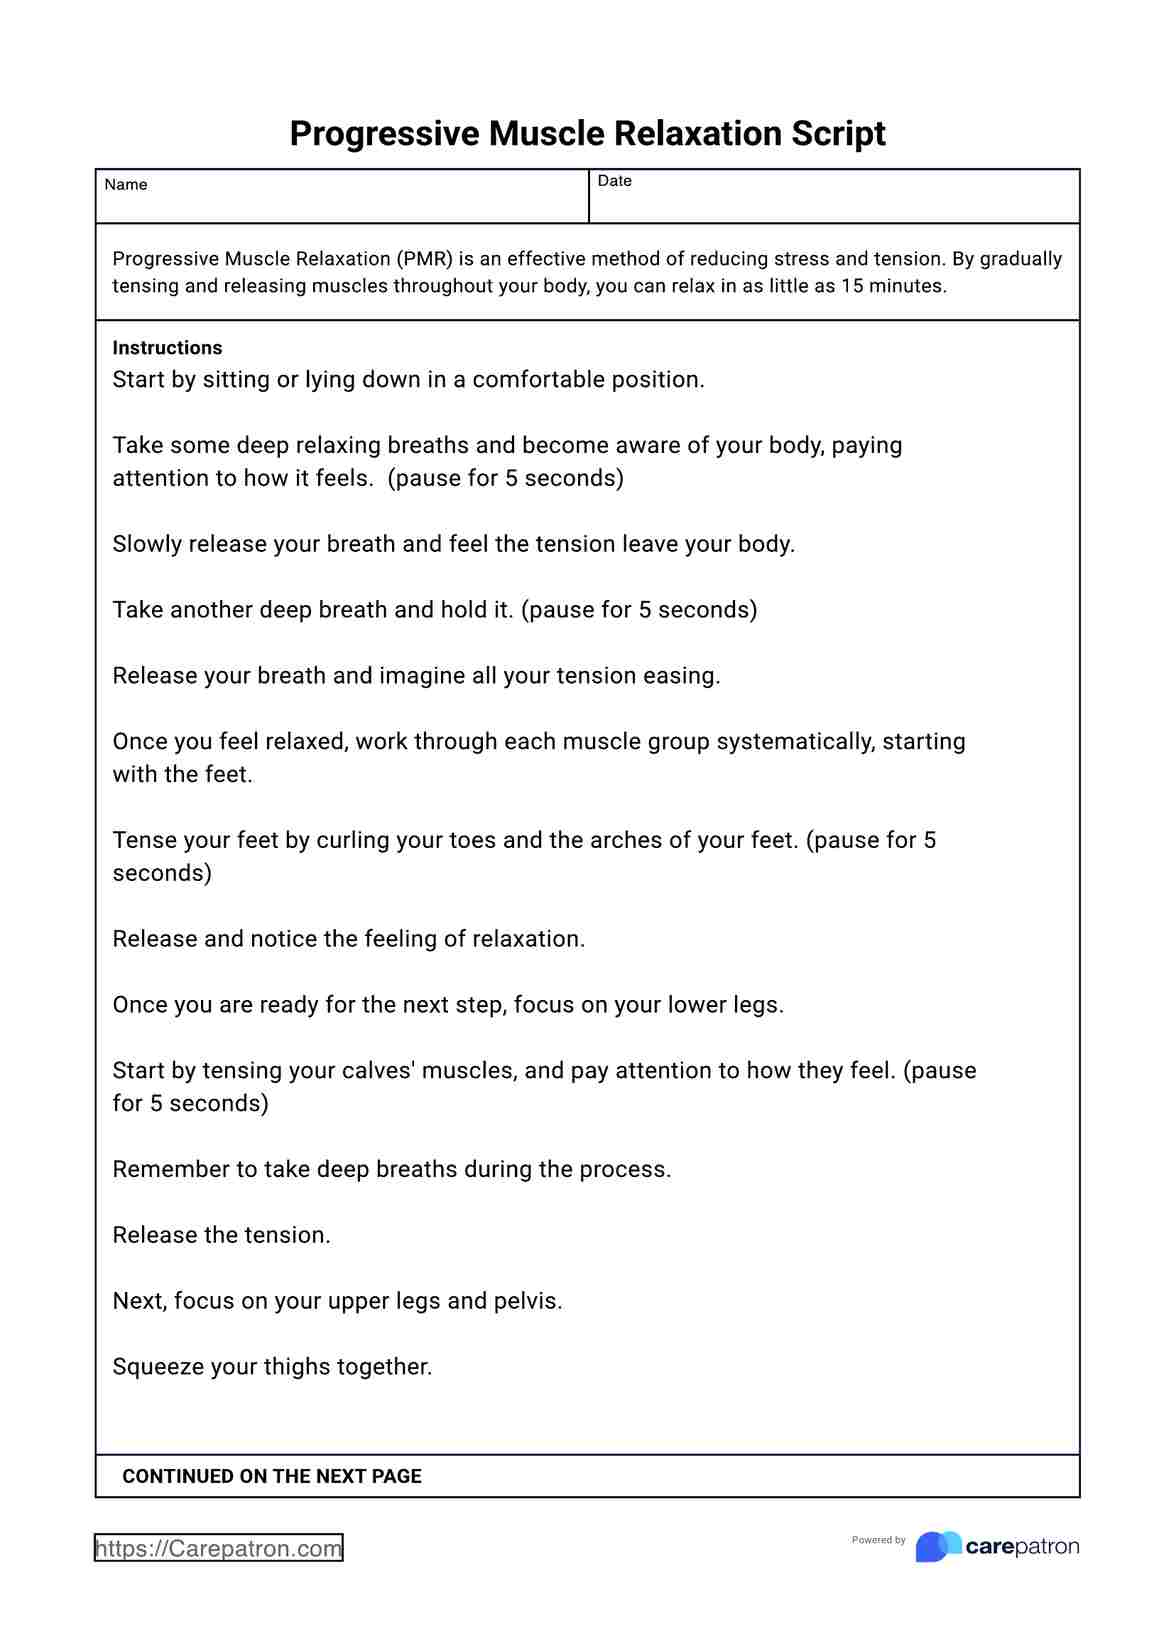 Progressive Muscle Relaxation Script PDF Example